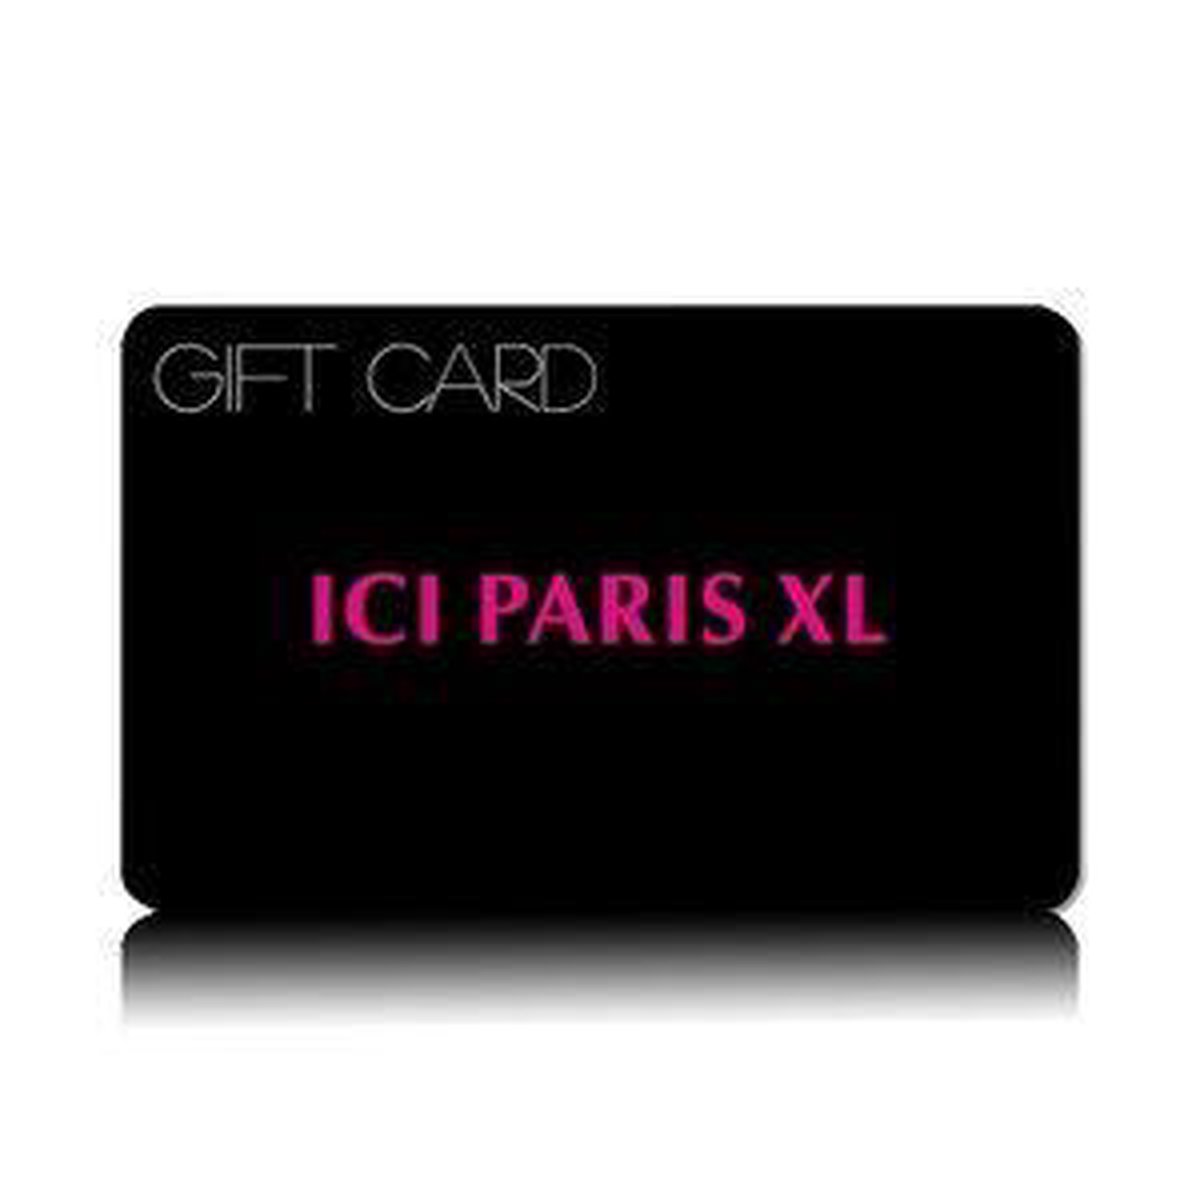 schijf Spaans Literaire kunsten ICI Paris XL gift card - 40 euro | bol.com